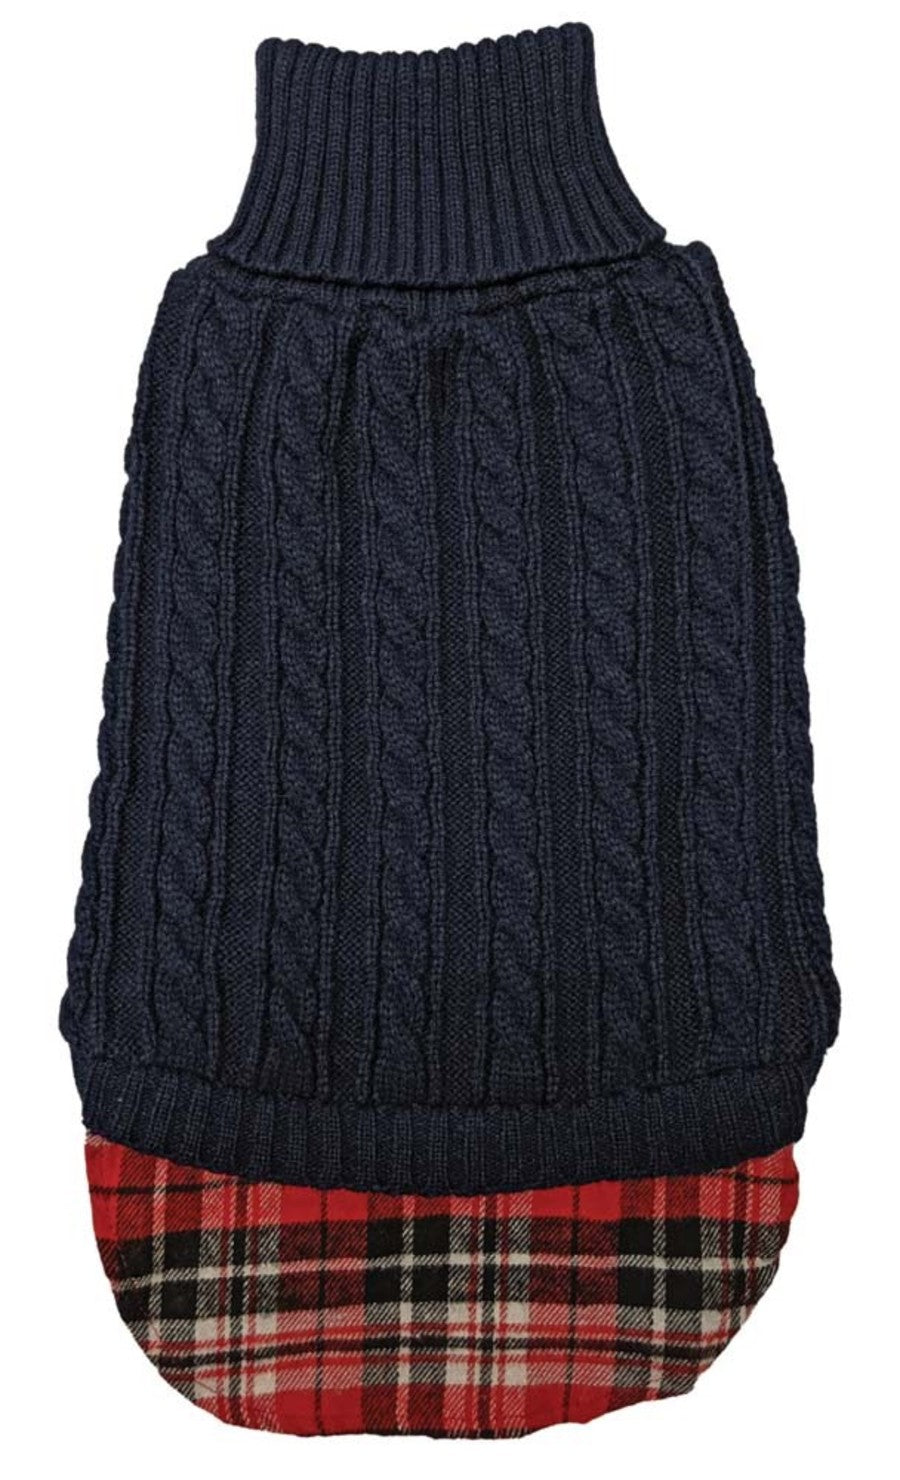 ET 603036 sweater navy LG